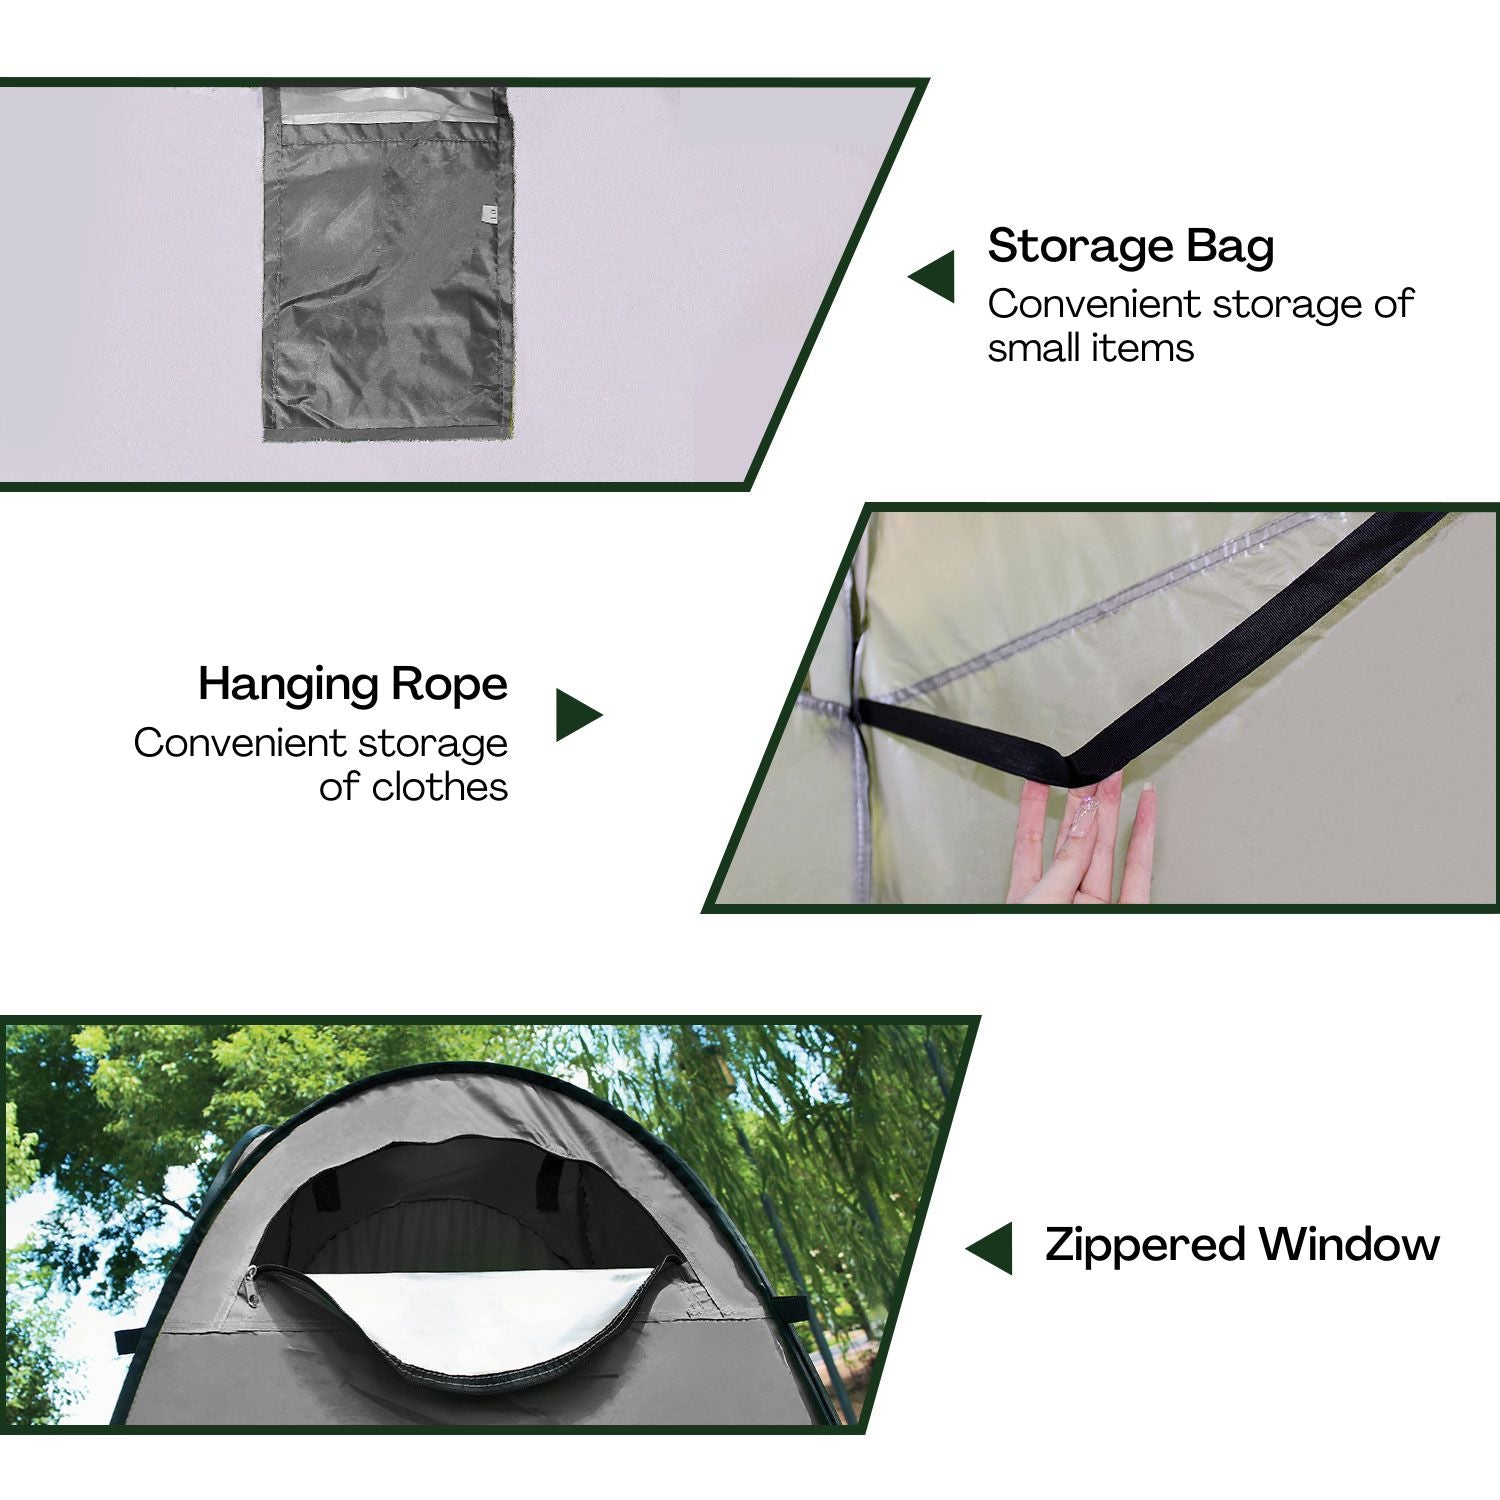 KILIROO Shower Tent with 2 Window (Orange) - SILBERSHELL